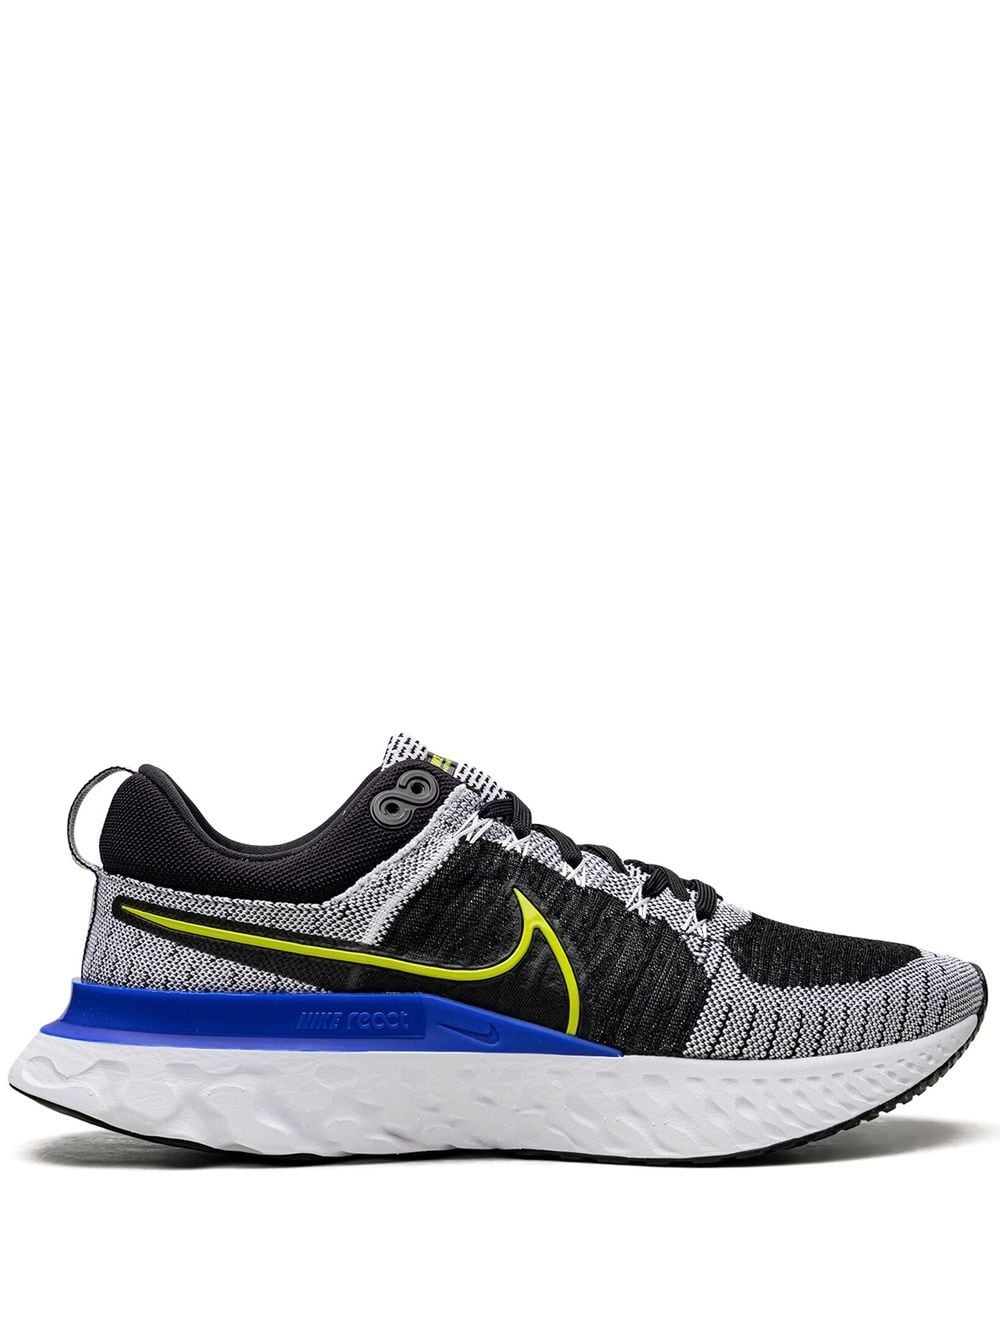 Nike React Infinity Run Flyknit 2 "White/Black/Racer Blue/Cyber" sneakers - Grey von Nike